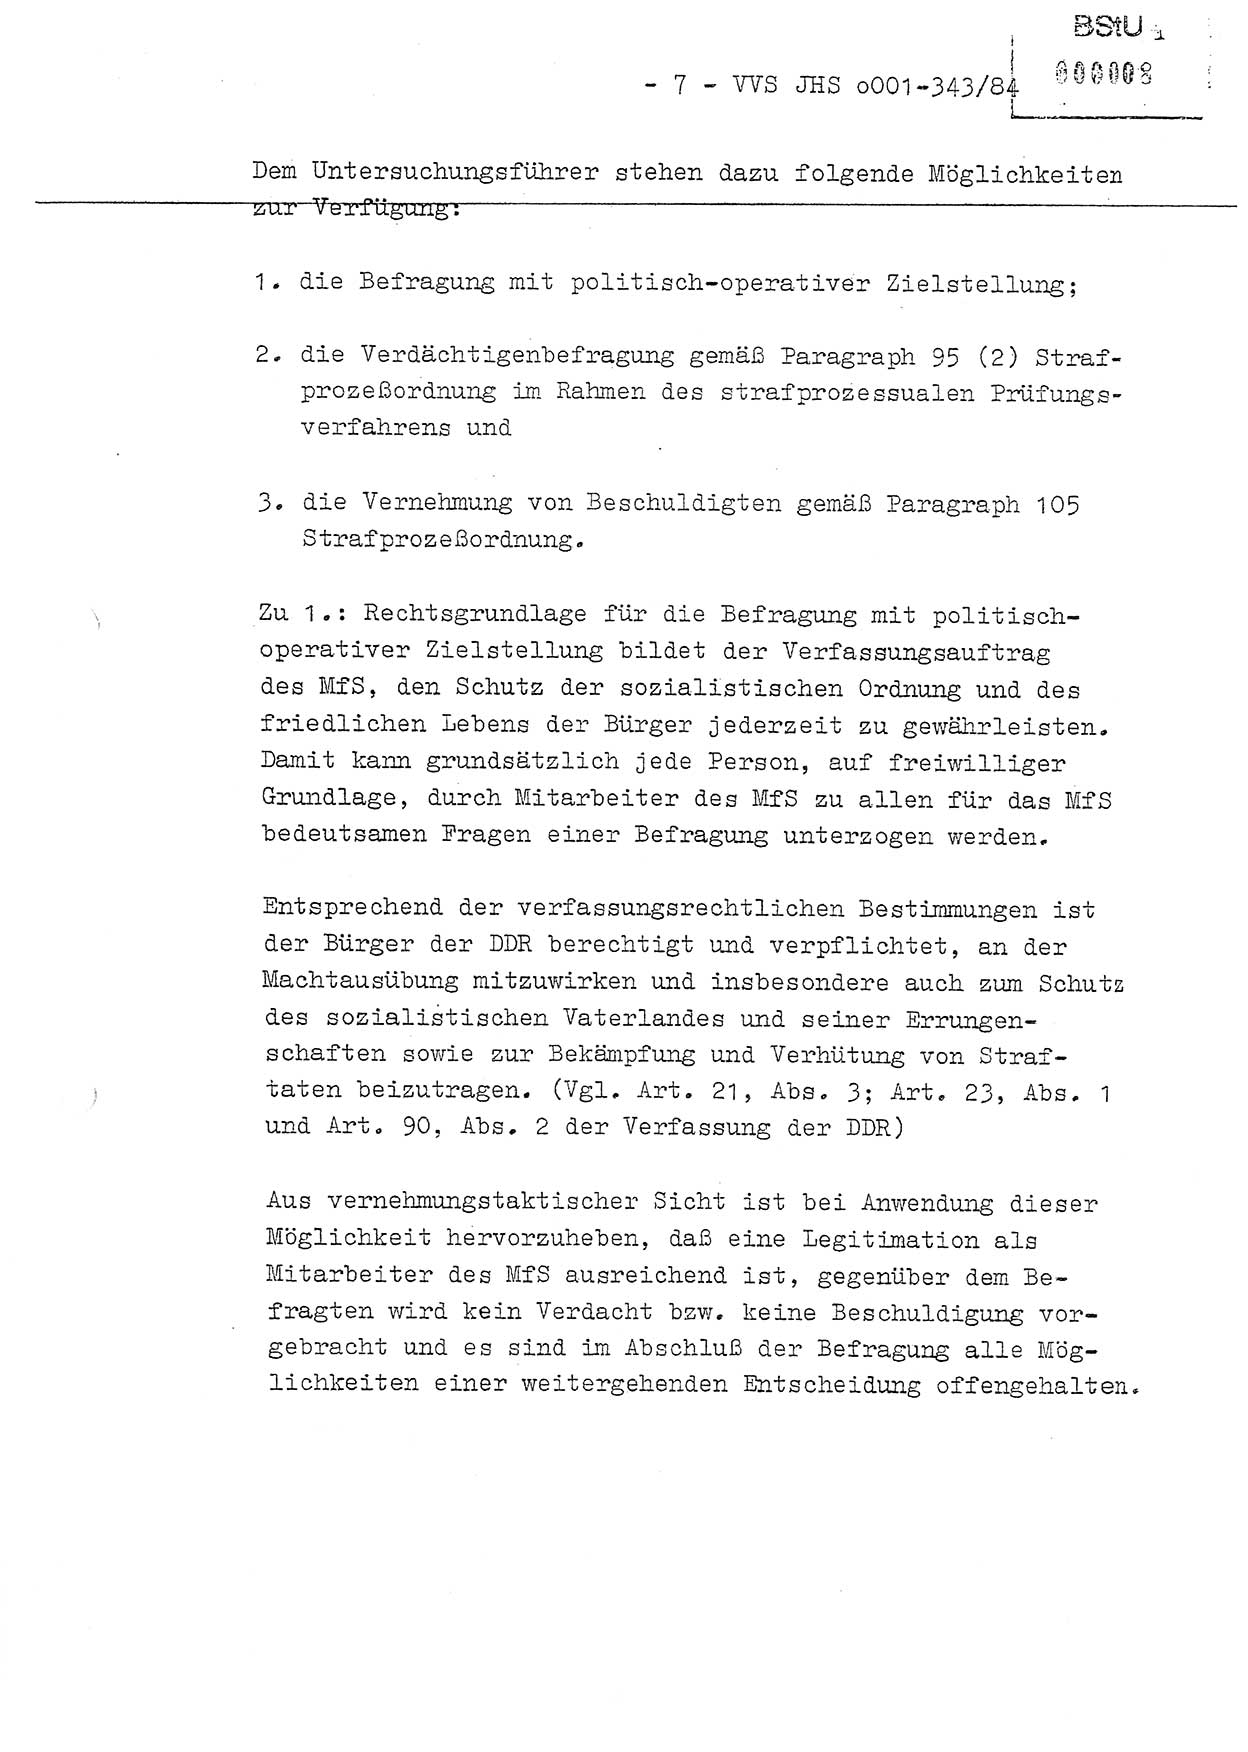 Diplomarbeit, Oberleutnant Bernd Michael (HA Ⅸ/5), Oberleutnant Peter Felber (HA IX/5), Ministerium für Staatssicherheit (MfS) [Deutsche Demokratische Republik (DDR)], Juristische Hochschule (JHS), Vertrauliche Verschlußsache (VVS) o001-343/84, Potsdam 1985, Seite 7 (Dipl.-Arb. MfS DDR JHS VVS o001-343/84 1985, S. 7)